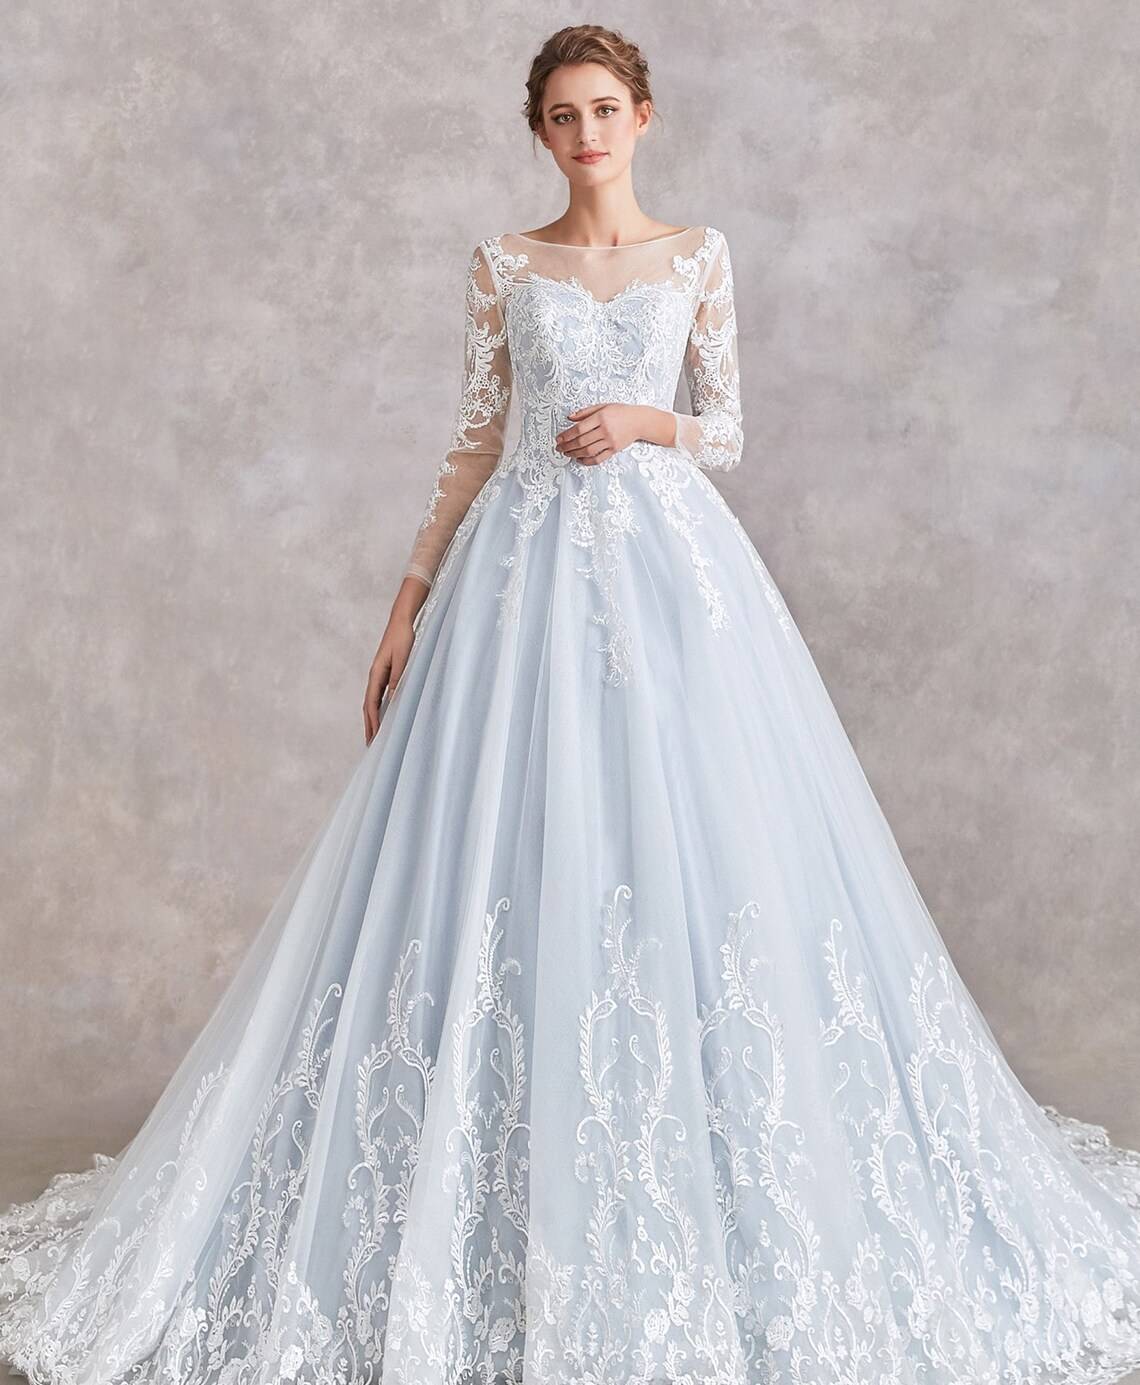 Princess Off the Shoulder Ball Gown Wedding Dress,Luxurious Bridal Gown,WD00636  | Vestidos de novia, Vestidos de novia blancos, Vestido de boda princesa